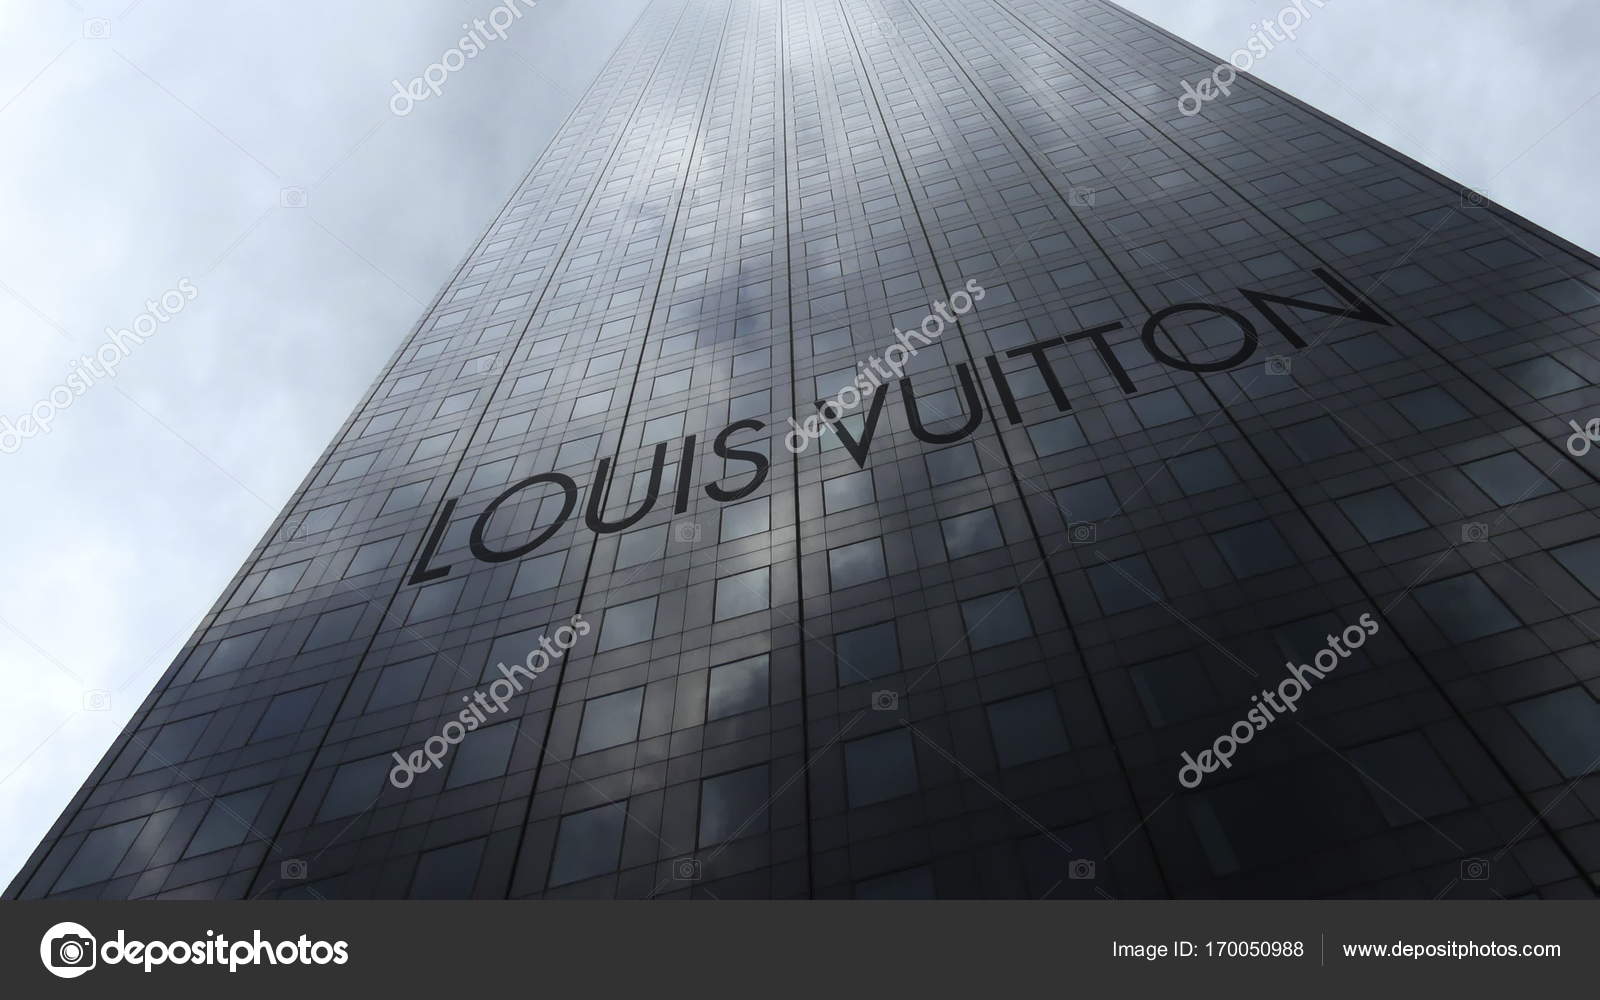 Louis vuitton logo editorial stock photo. Illustration of louis